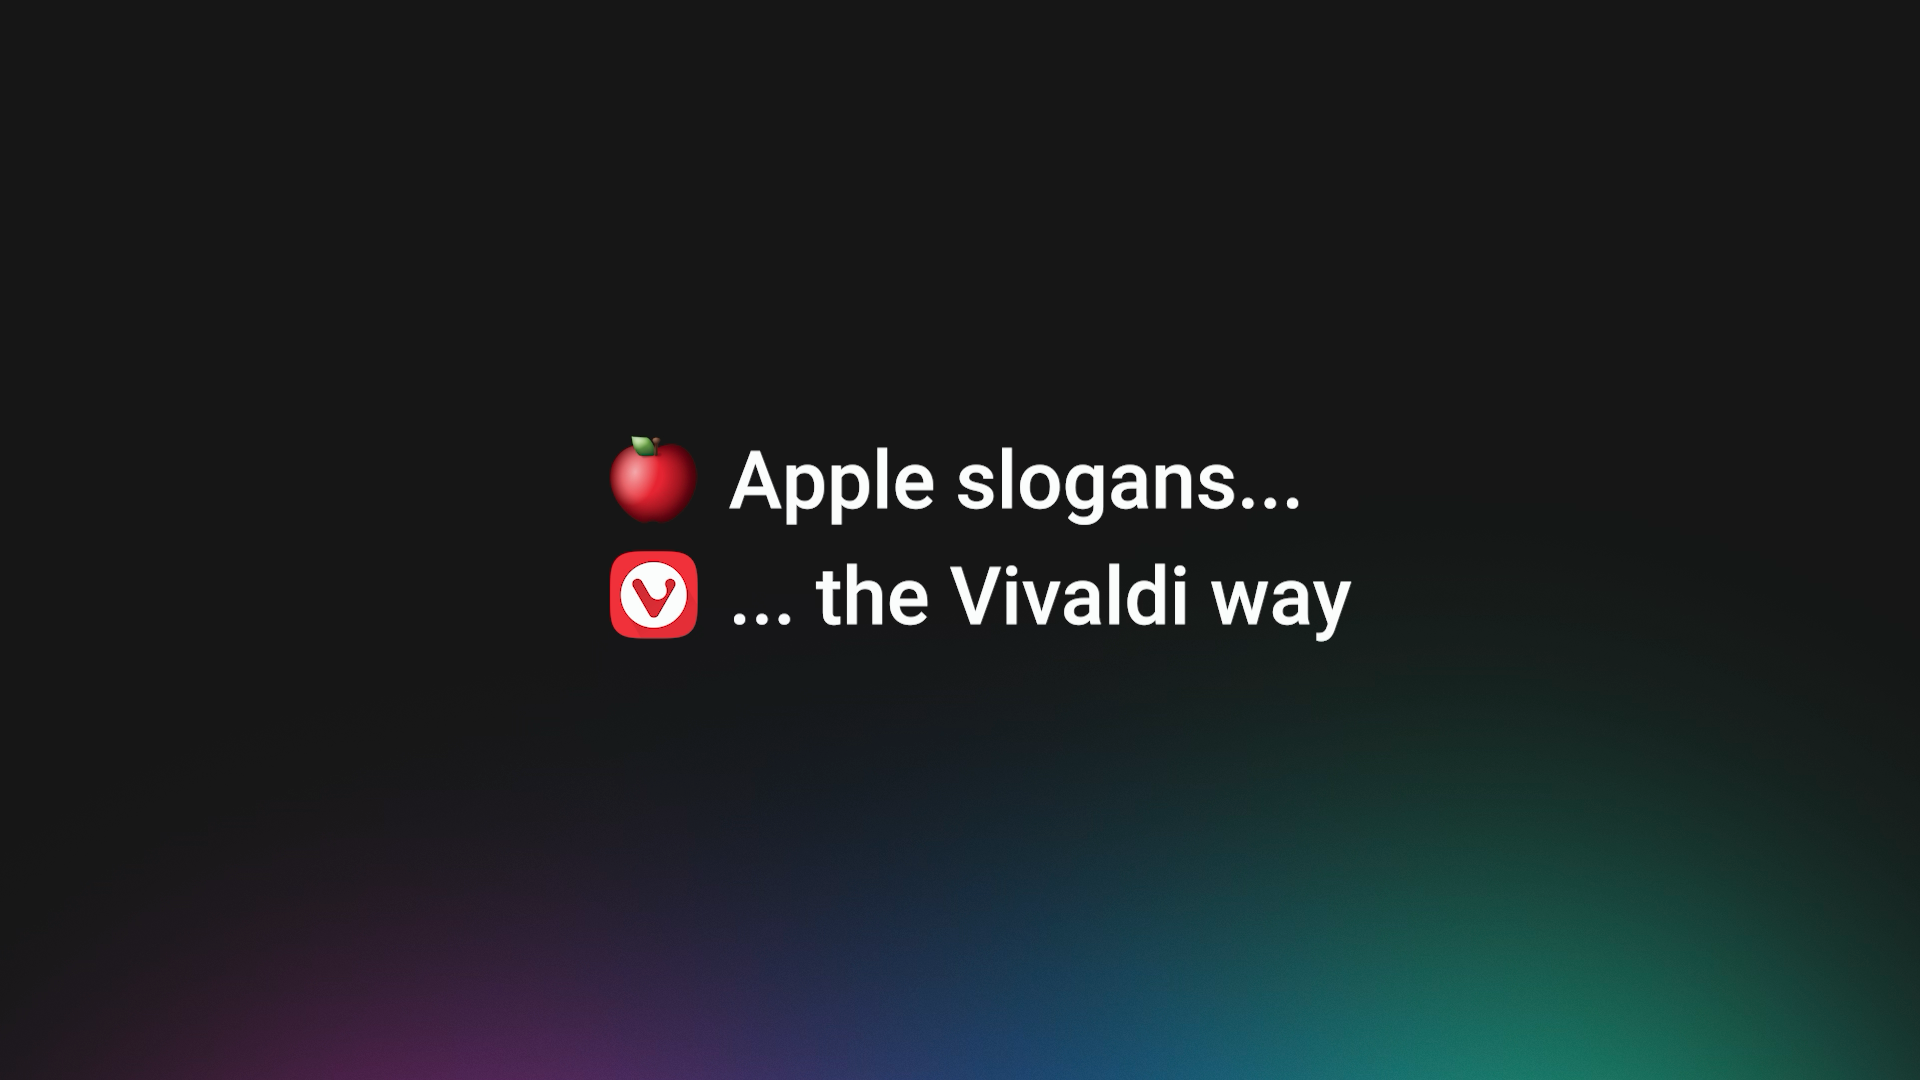 instal the new for apple Vivaldi браузер 6.1.3035.111